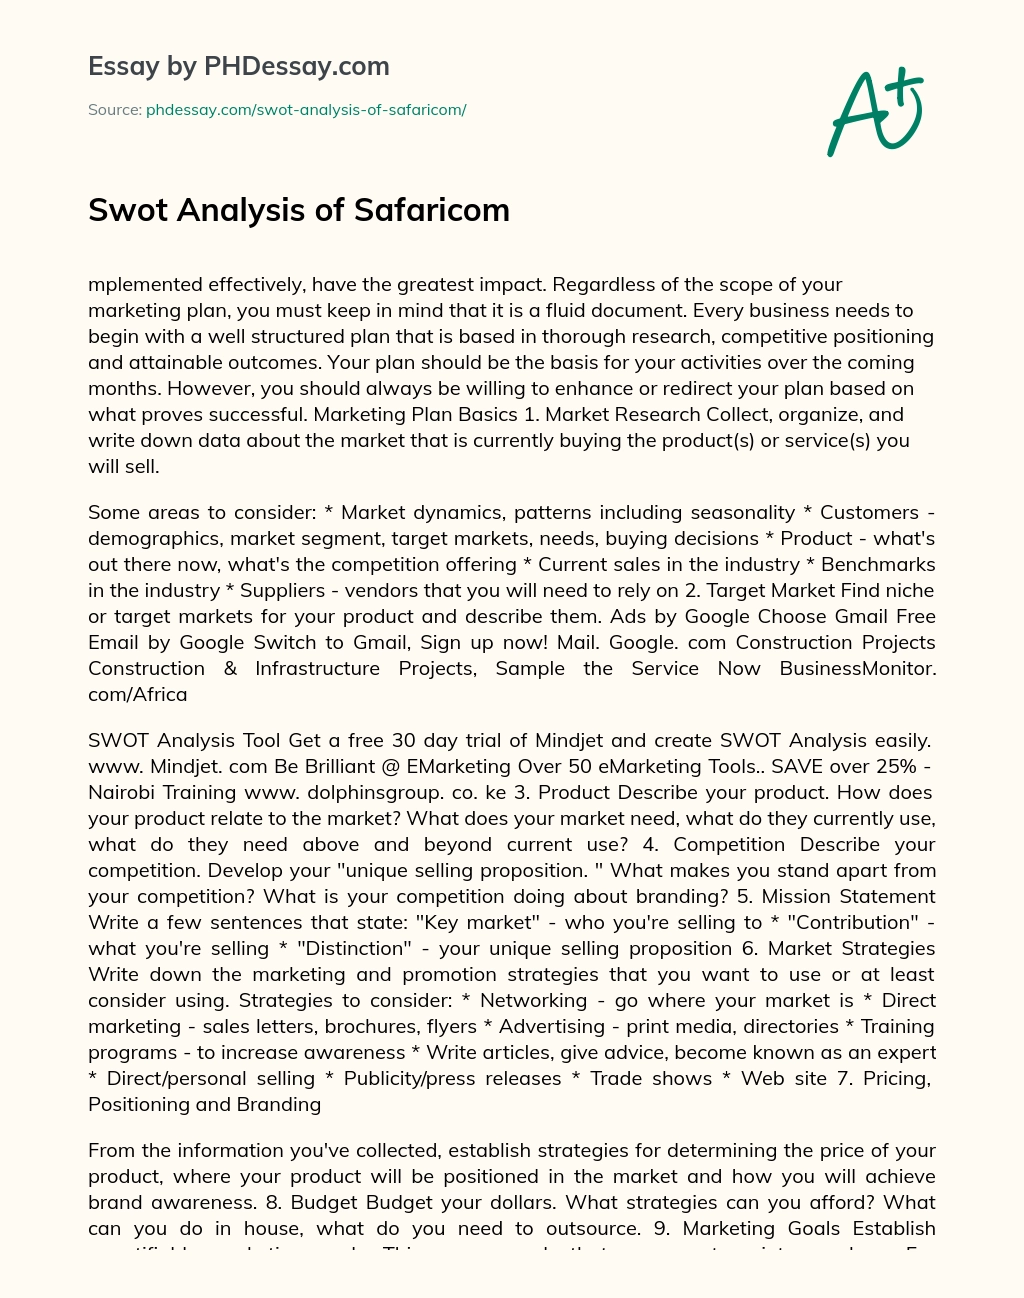 Swot Analysis of Safaricom essay